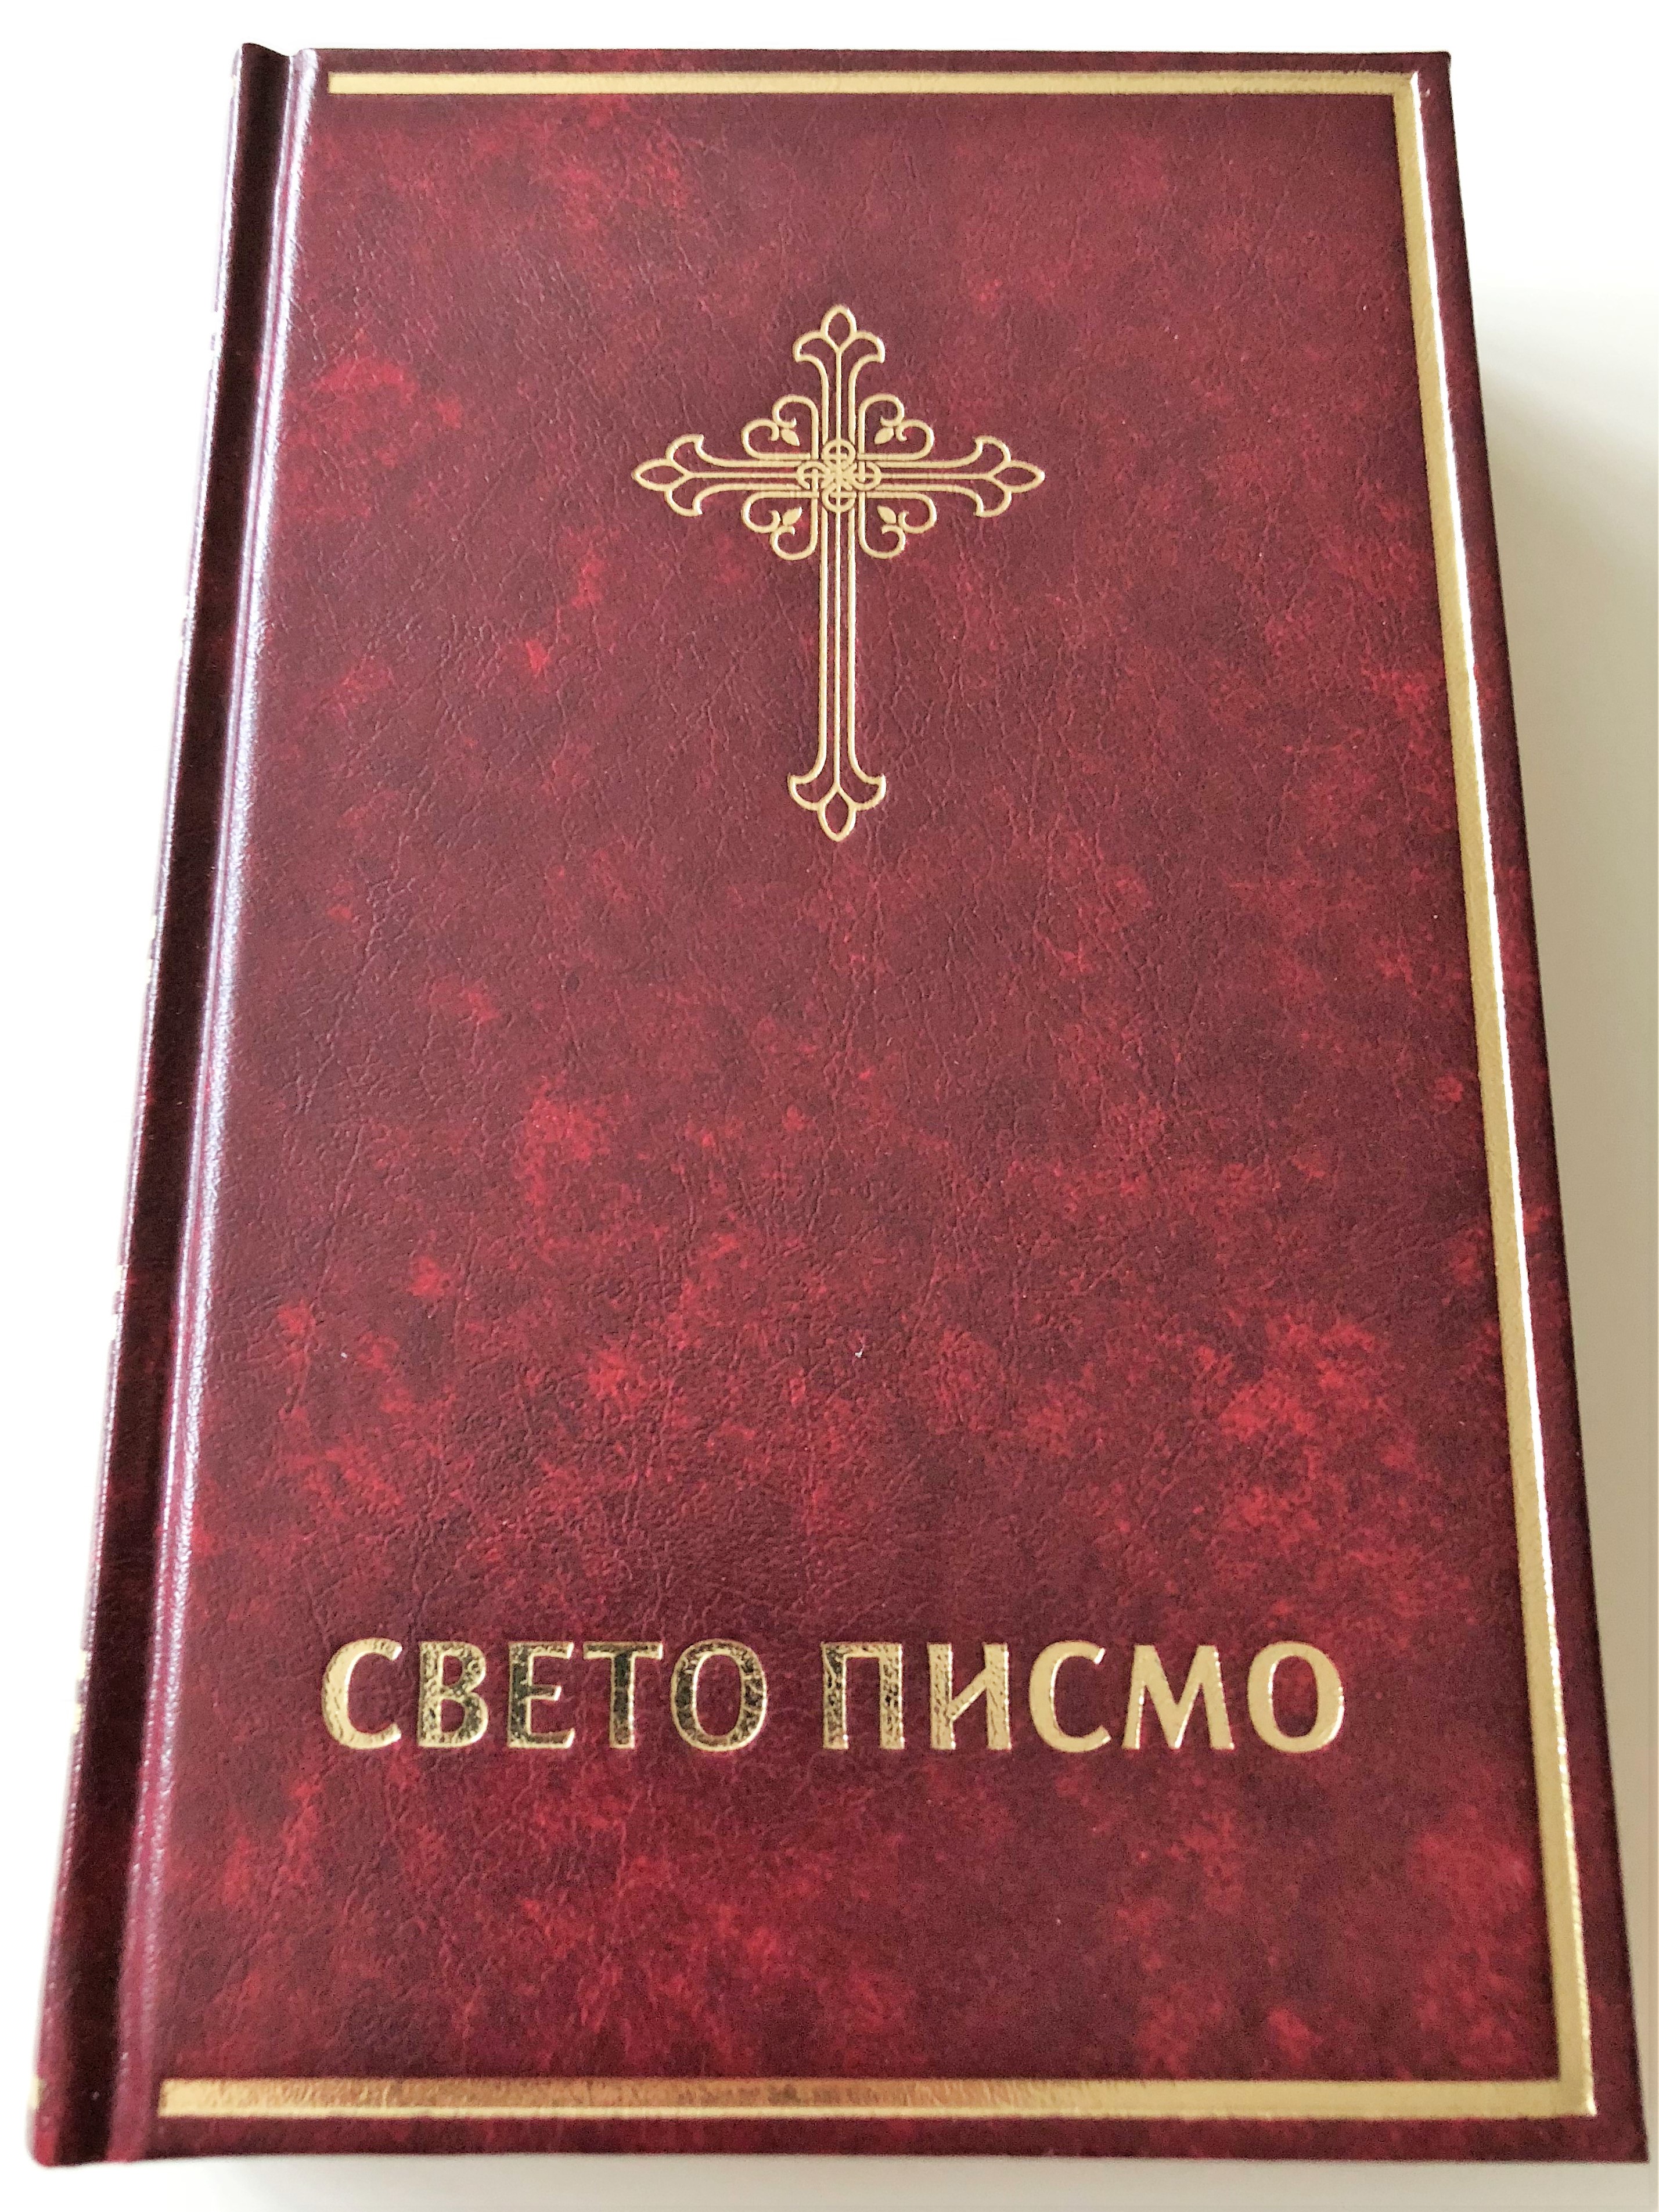 serbian-language-bible-burgundy-cover-with-golden-cross-cyrillic-script-043hs-5-.jpg